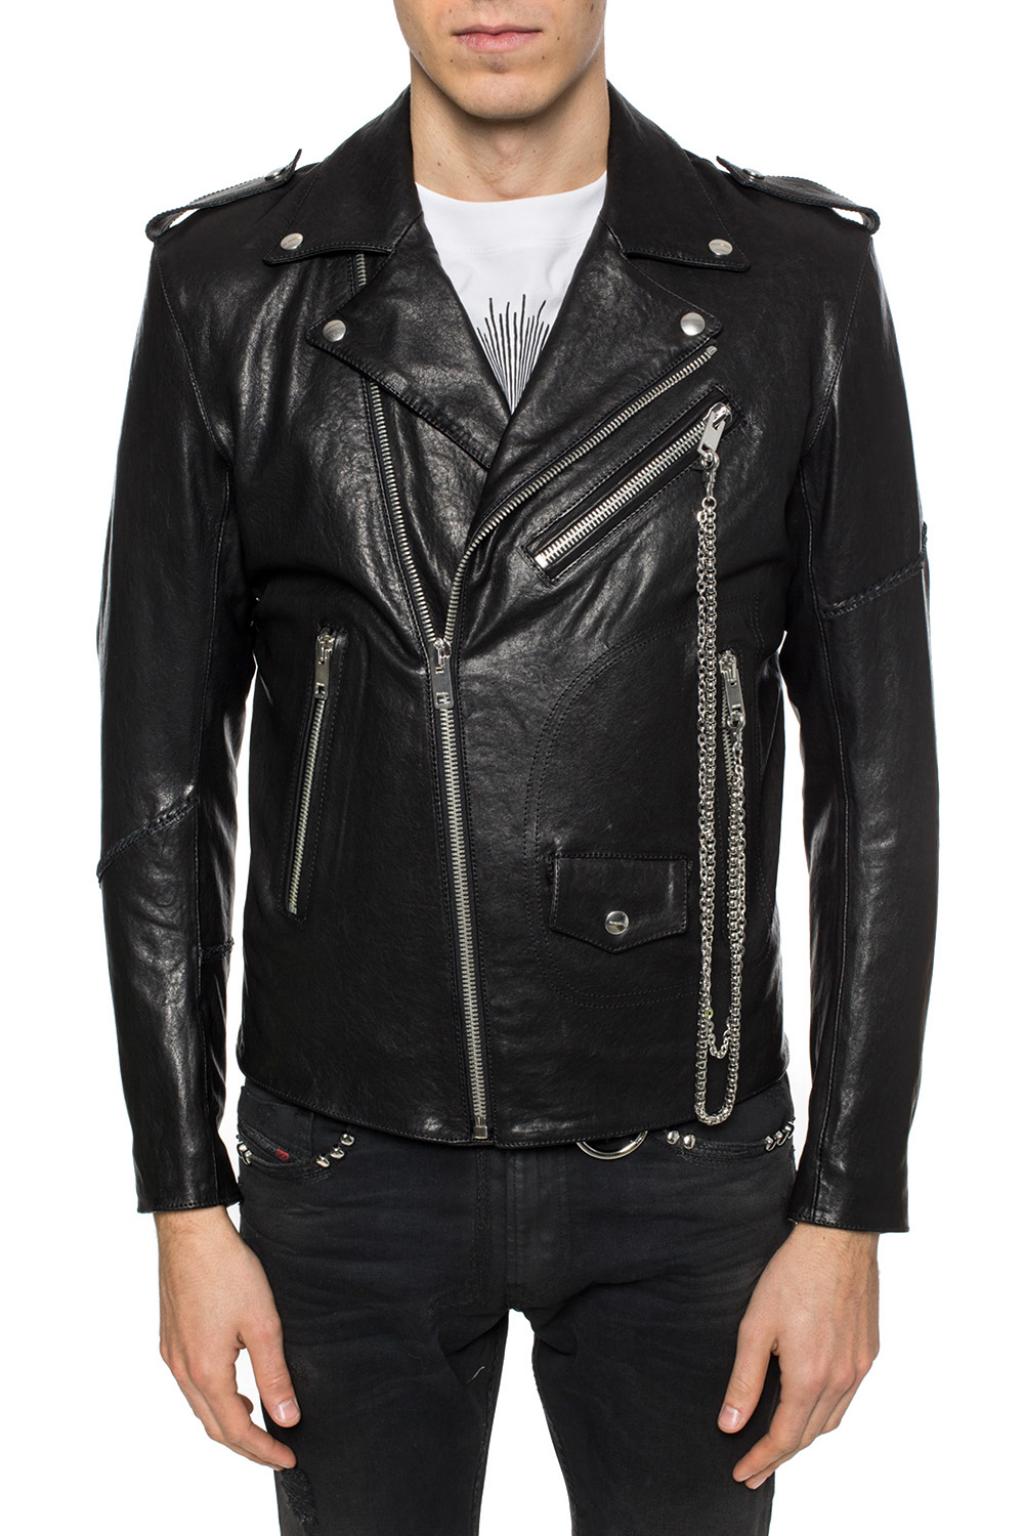 Men's Chains Black Leather Jacket